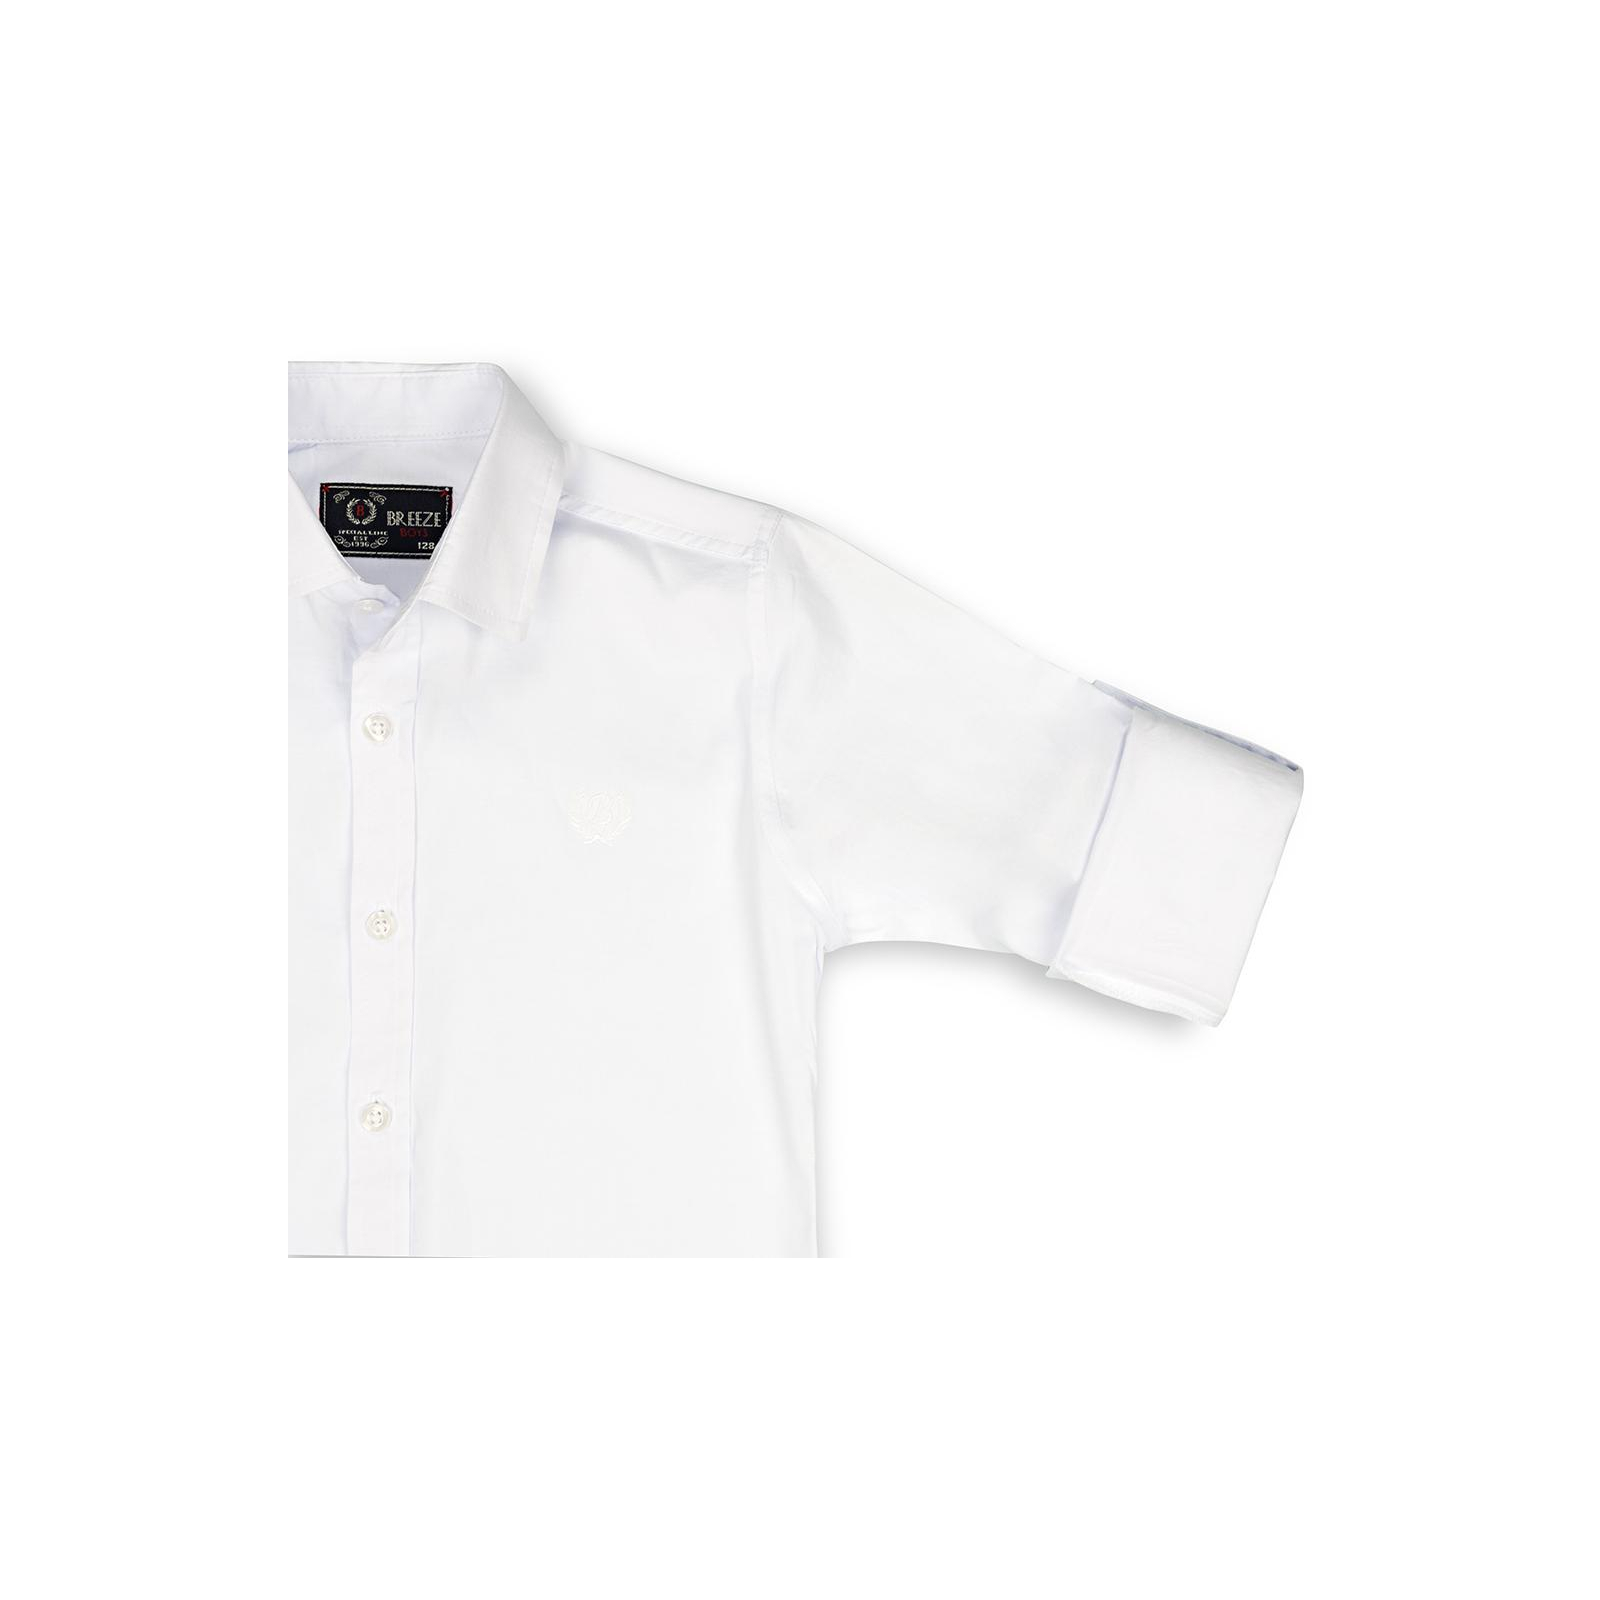 Рубашка Breeze для школы (G-285-164B-white) изображение 2